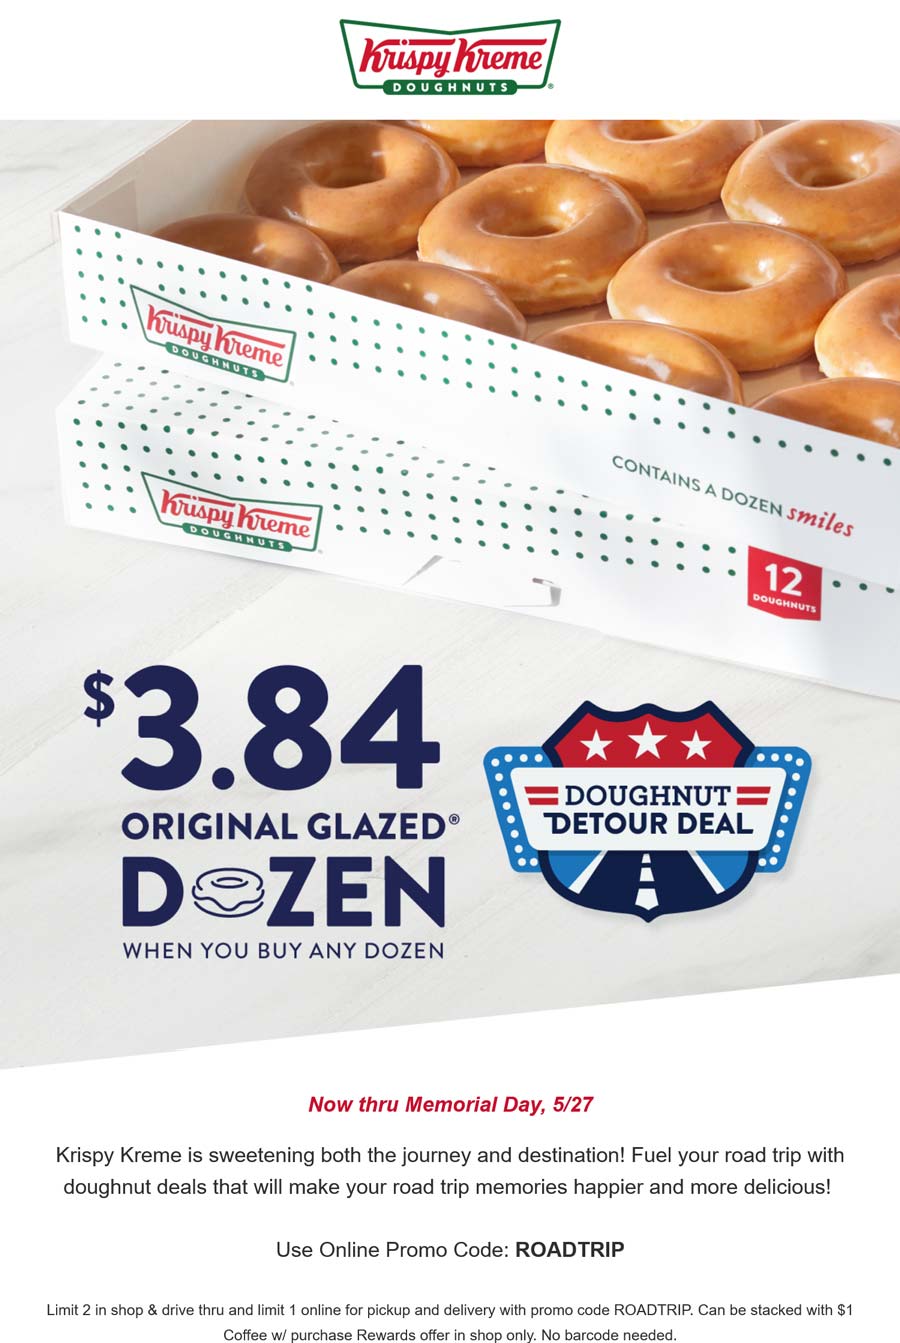 Krispy Kreme restaurants Coupon  Second dozen $3.84 at Krispy Kreme doughnuts via promo code ROADTRIP #krispykreme 